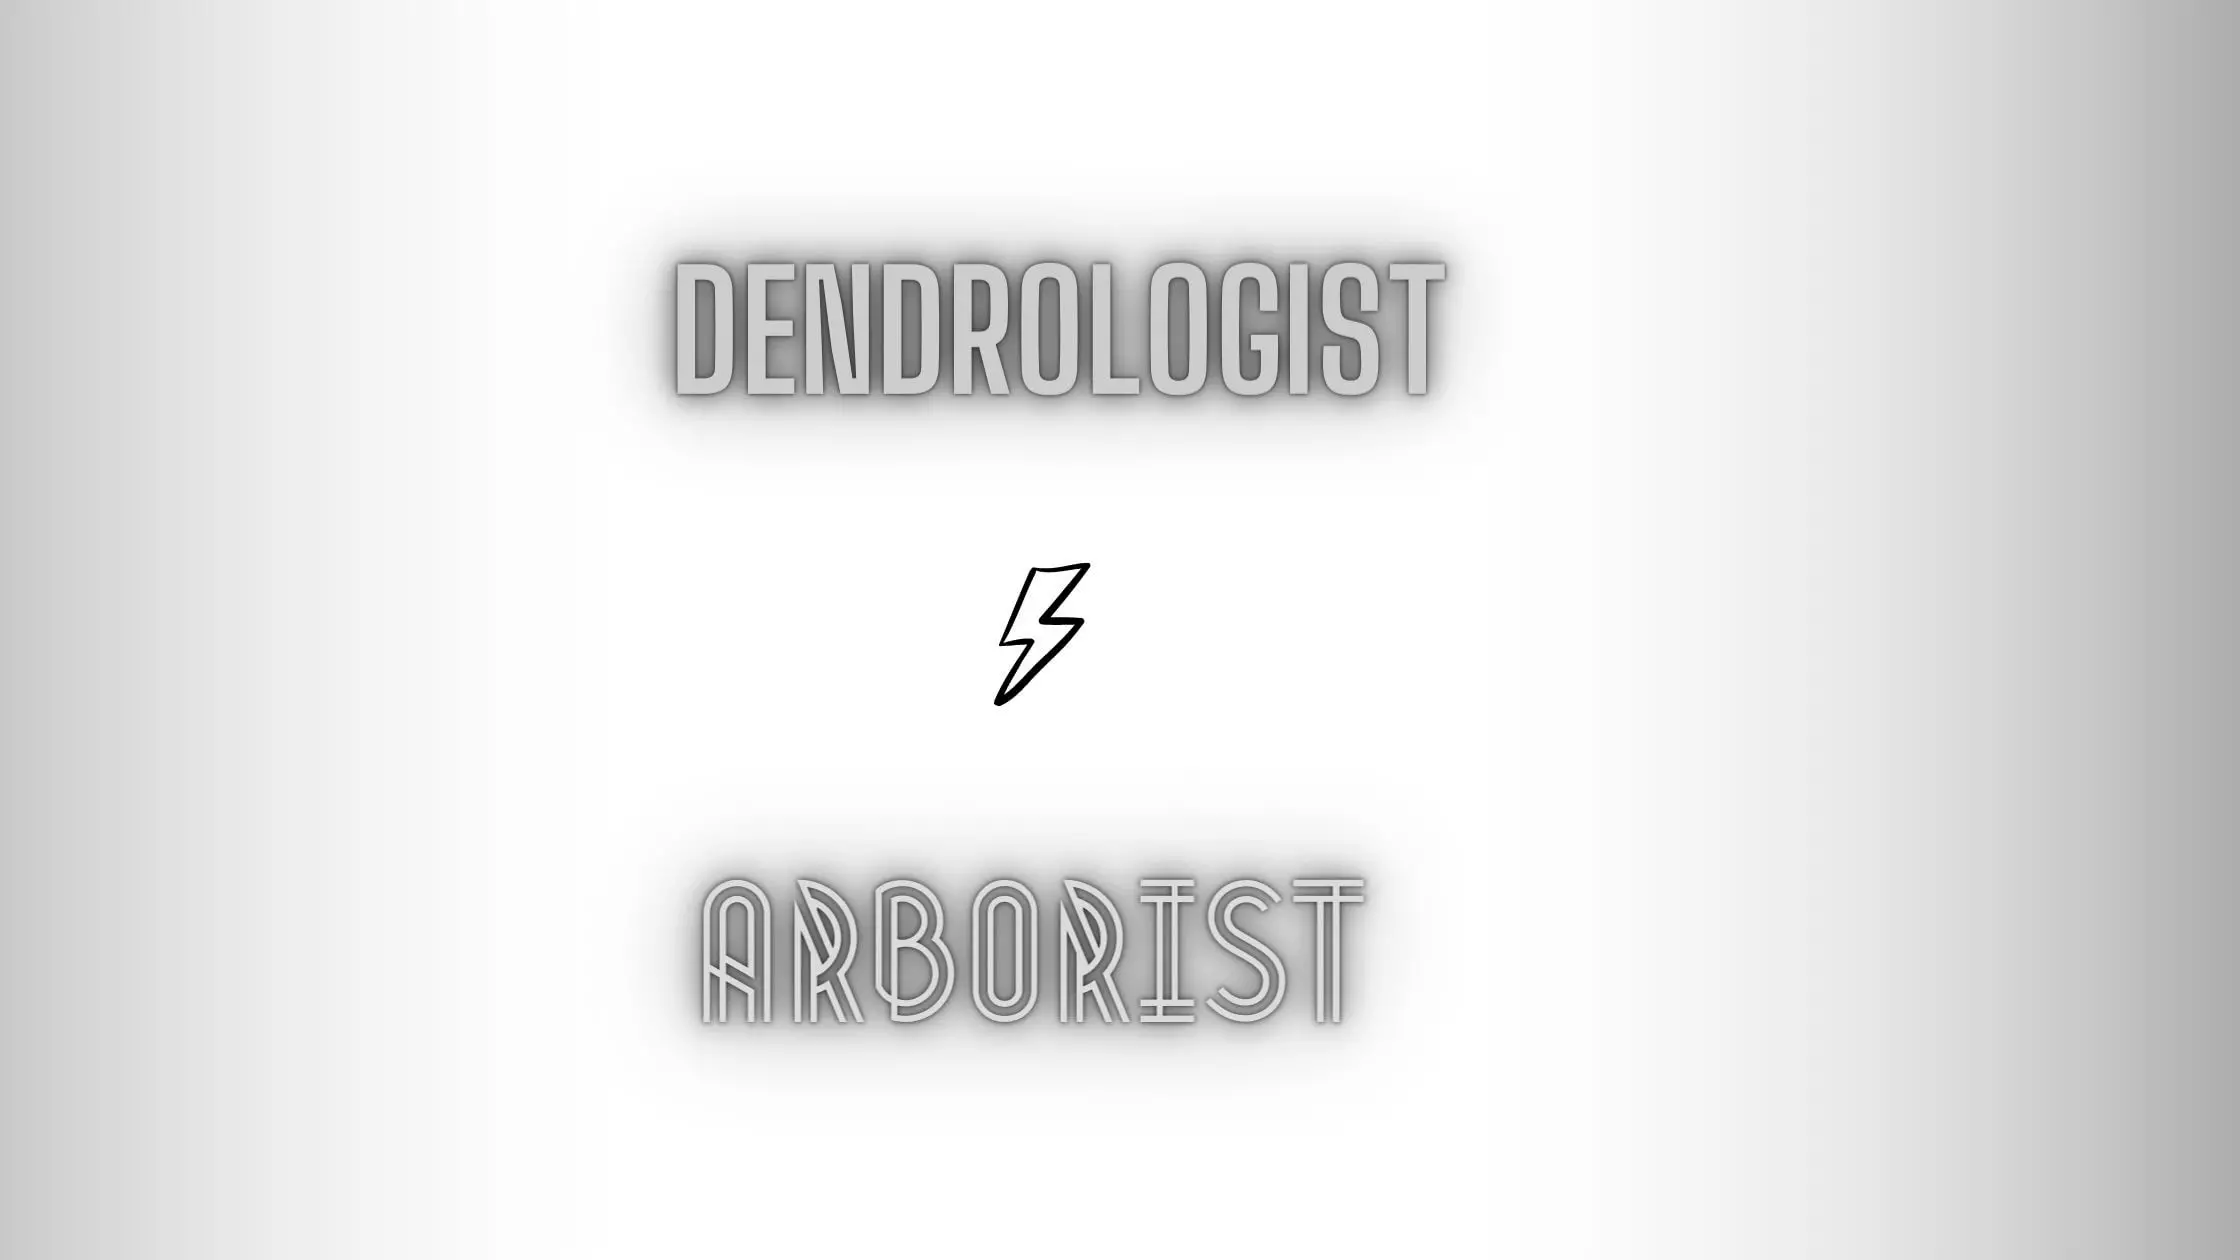 Dendrologist vs Arborist